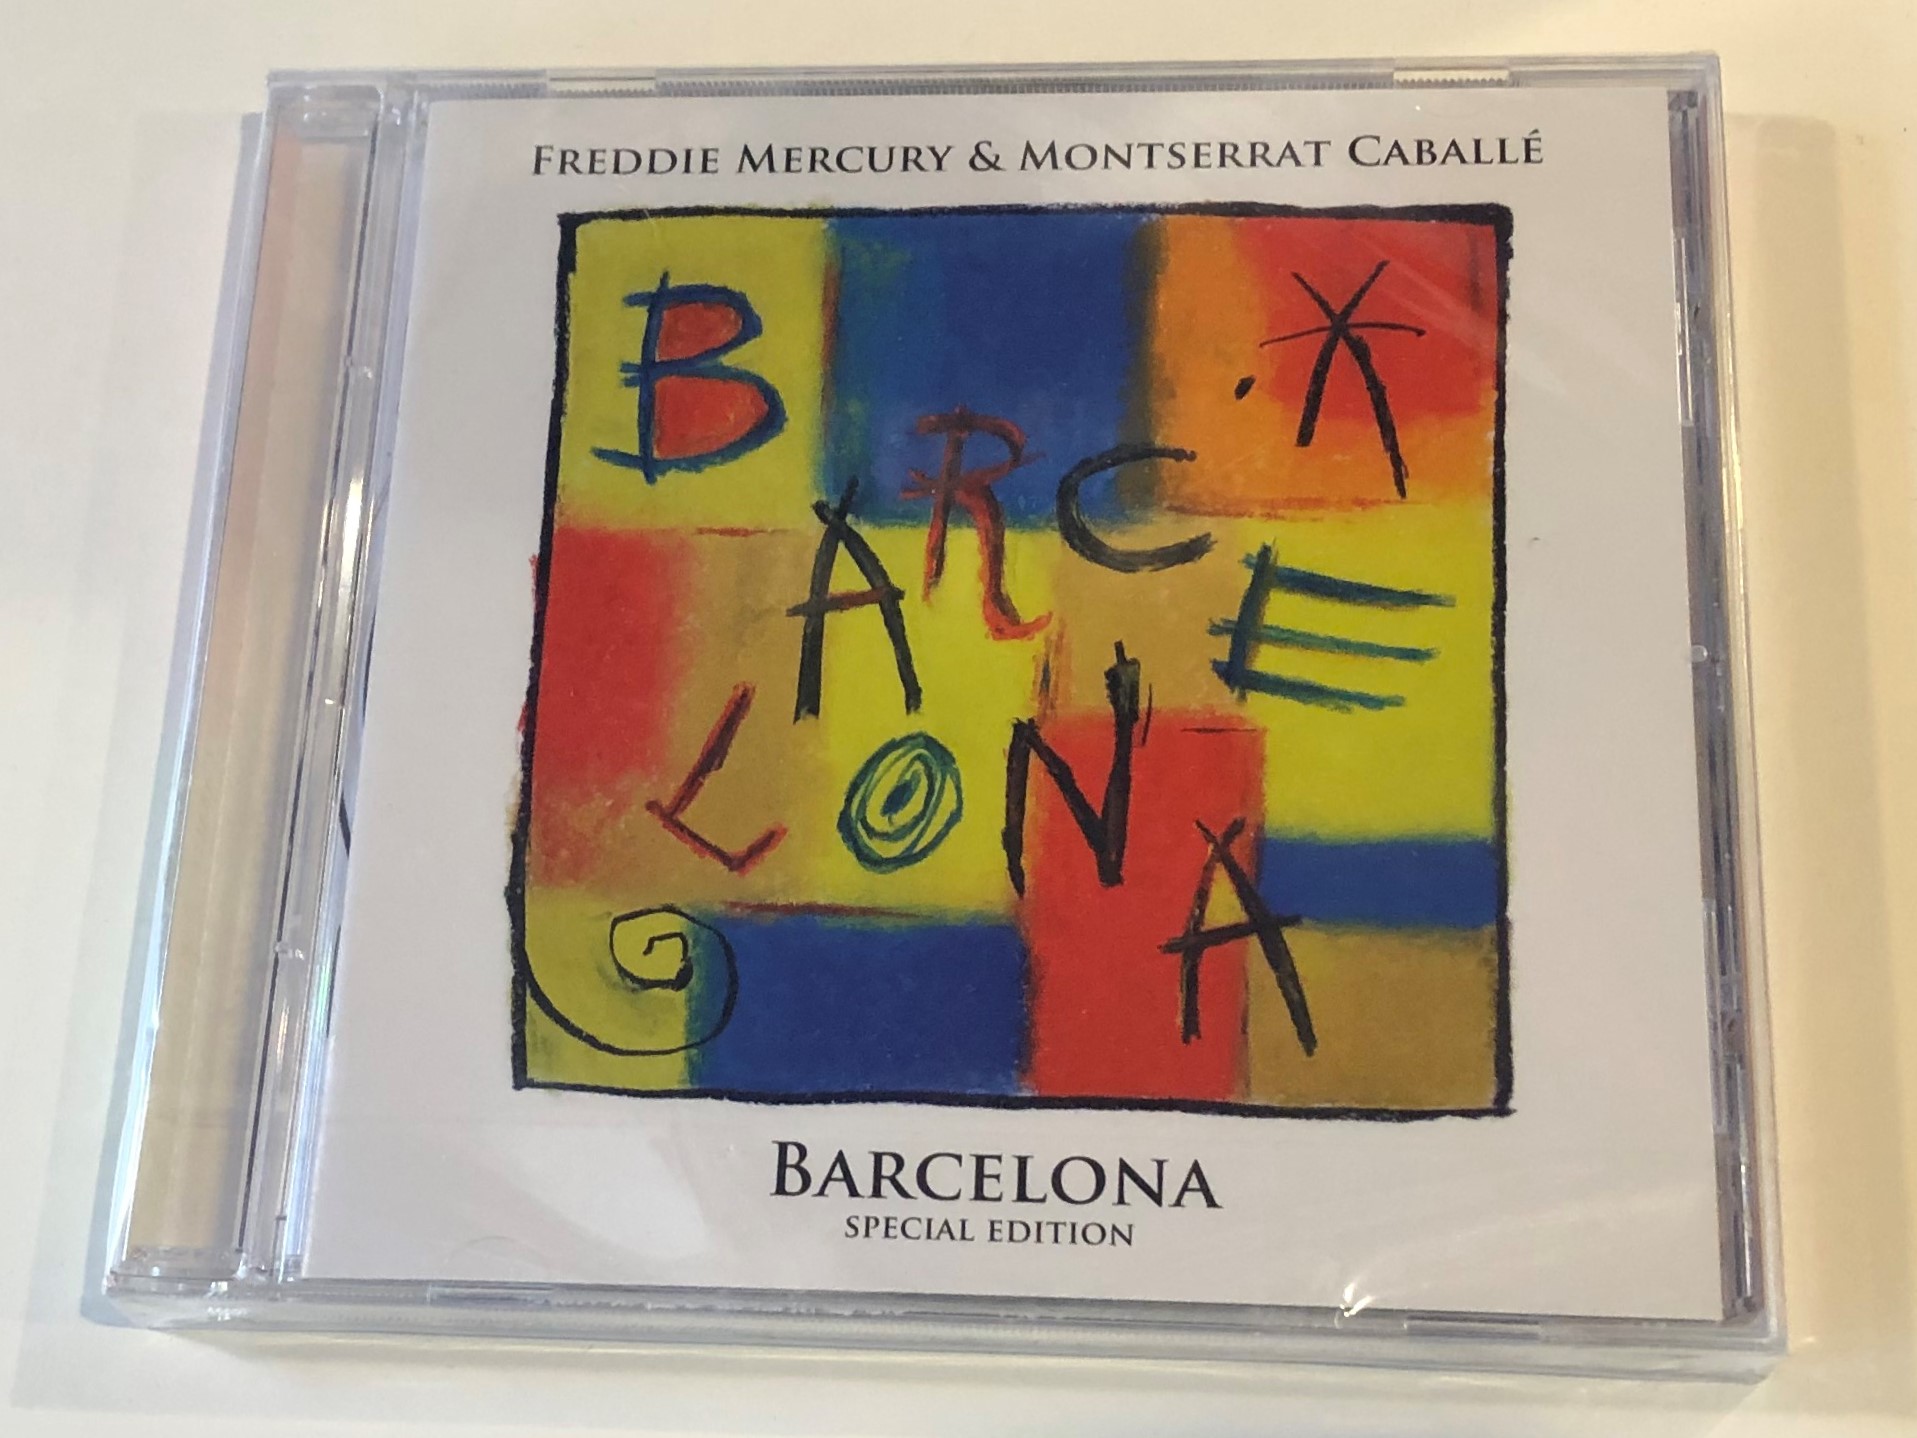 freddie-mercury-montserrat-caball-barcelona-special-edition-mercury-songs-ltd.-audio-cd-2012-371-140-6-1-.jpg